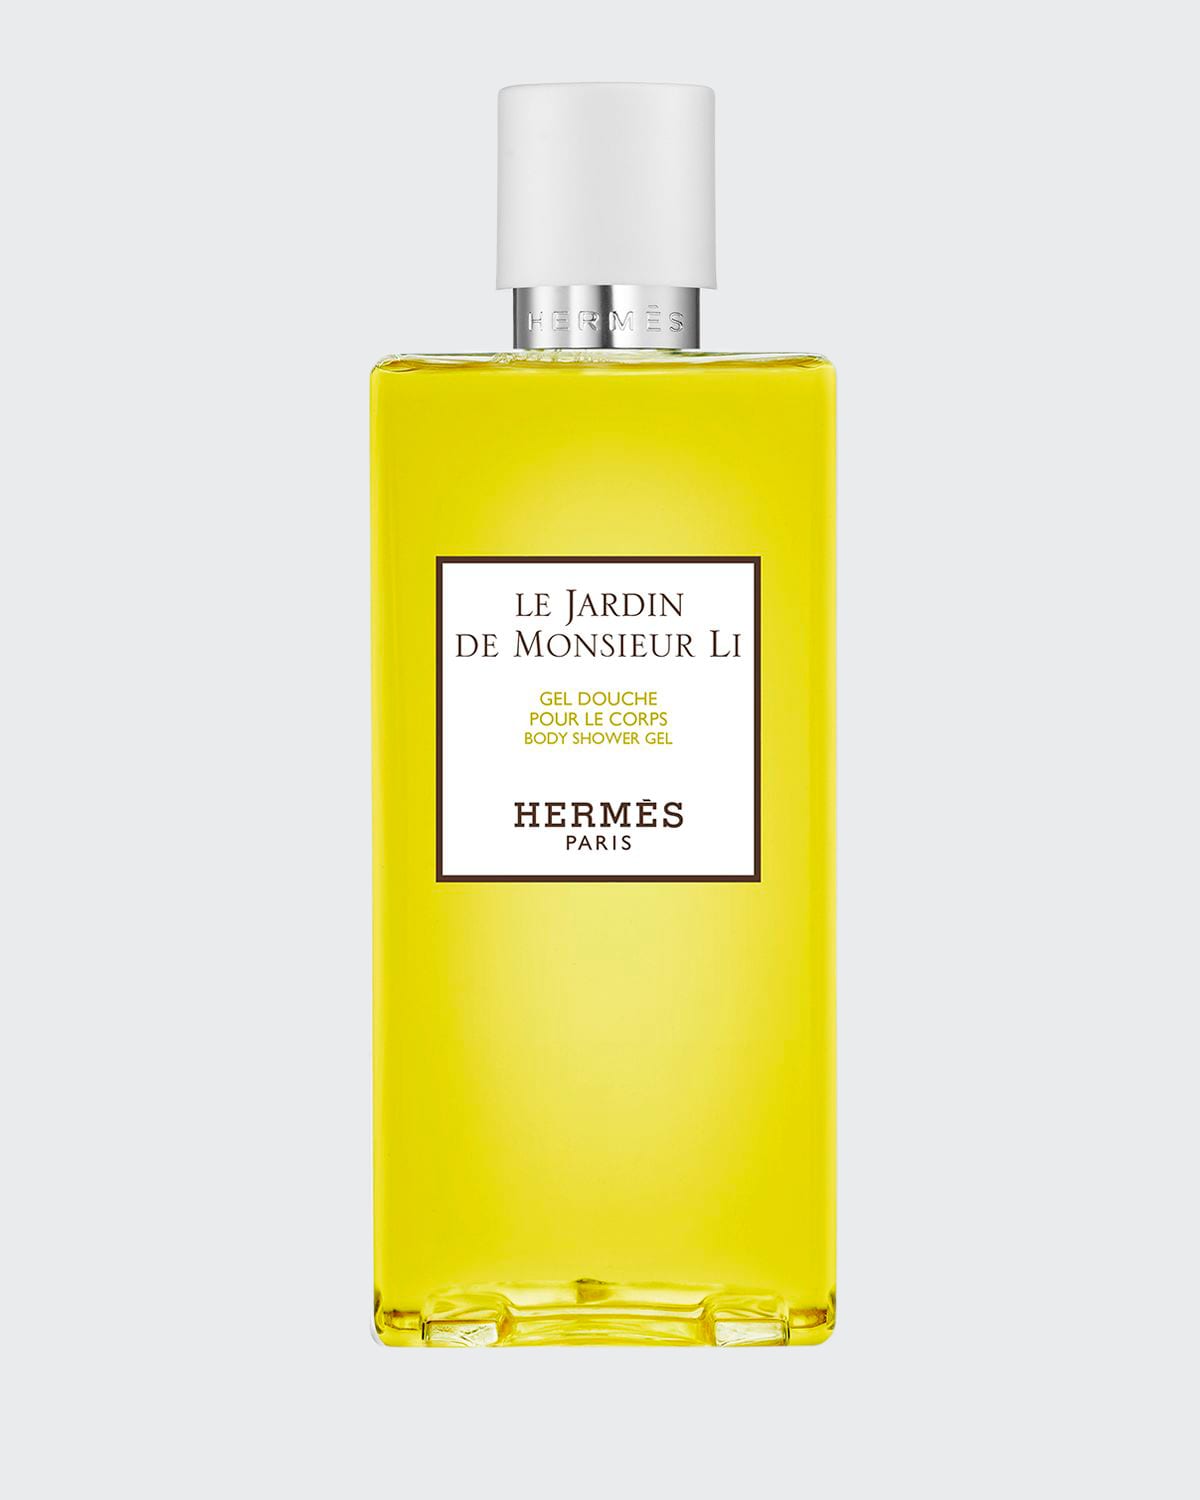 Hermes Un Jardin De Monsieur Li Body Shower Gel, 6.5 Oz.